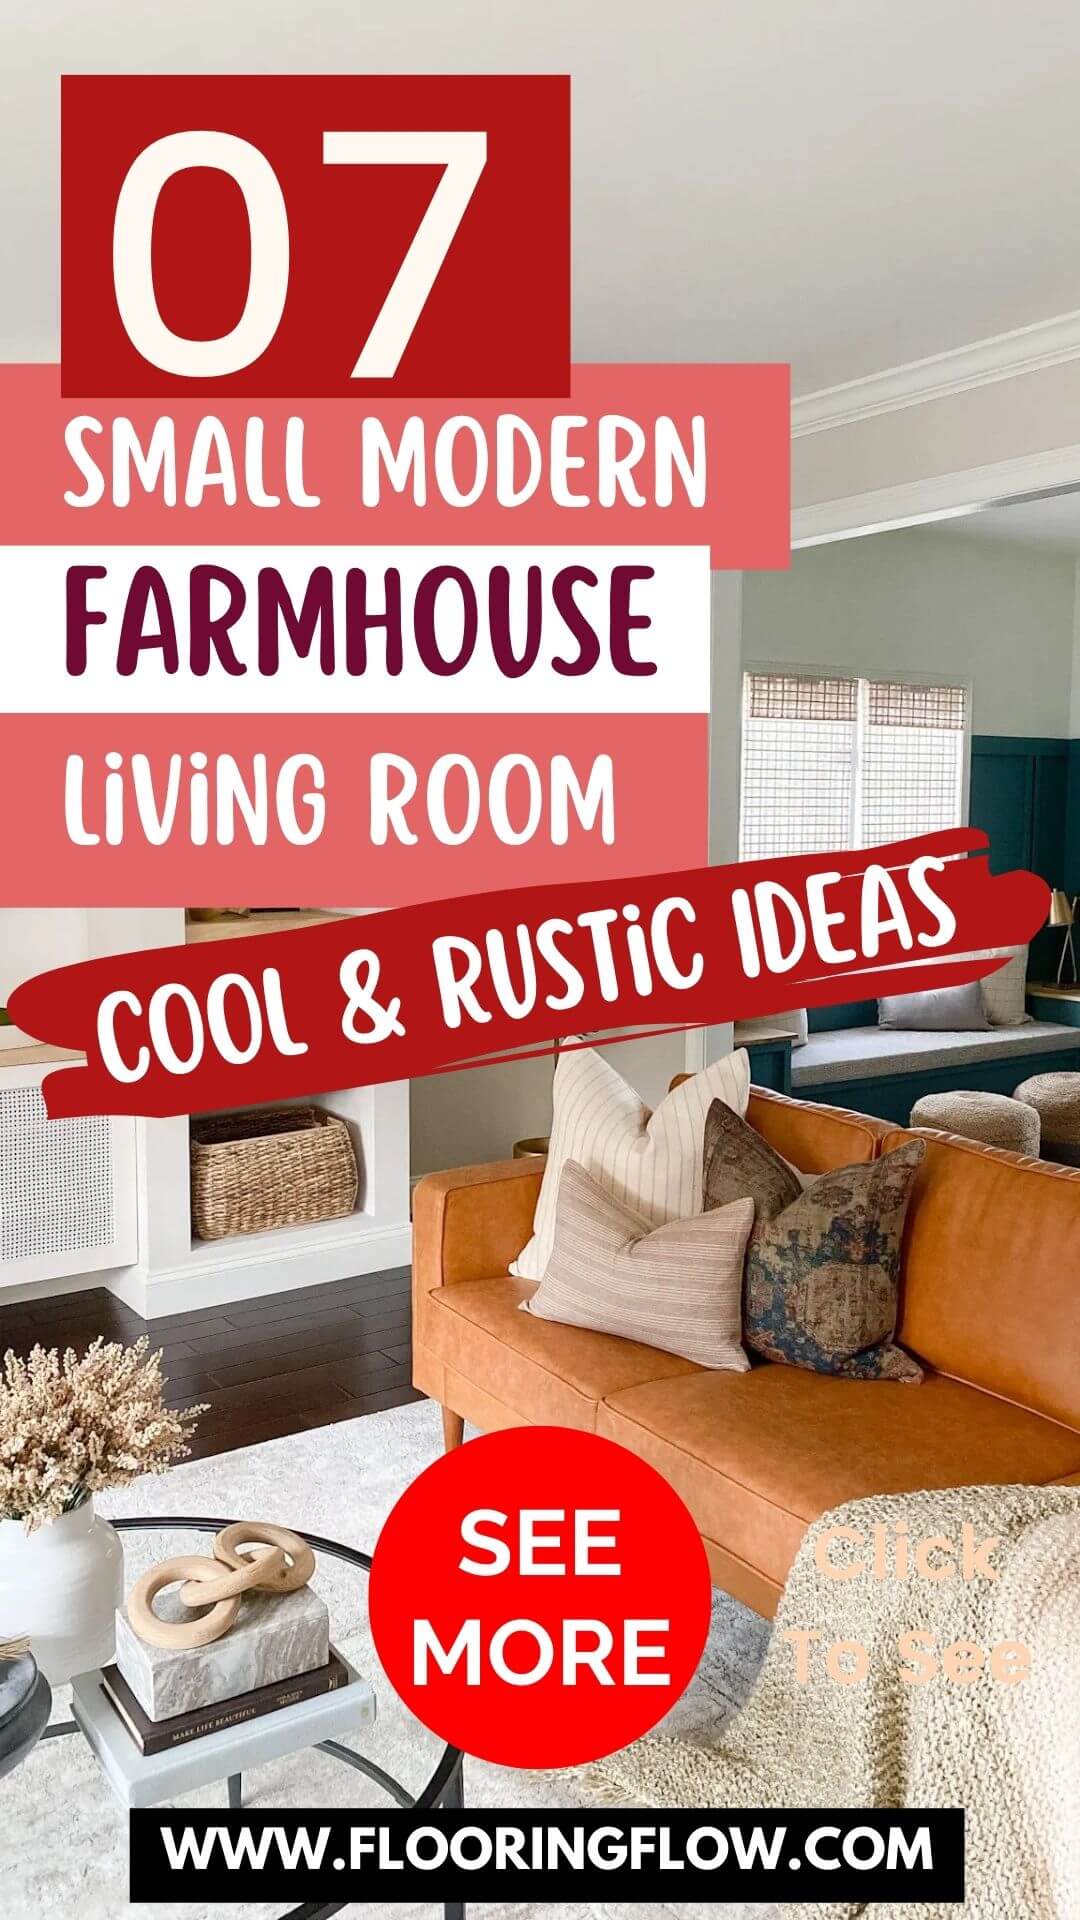 Small Modern Farmhouse Living Room Ideas